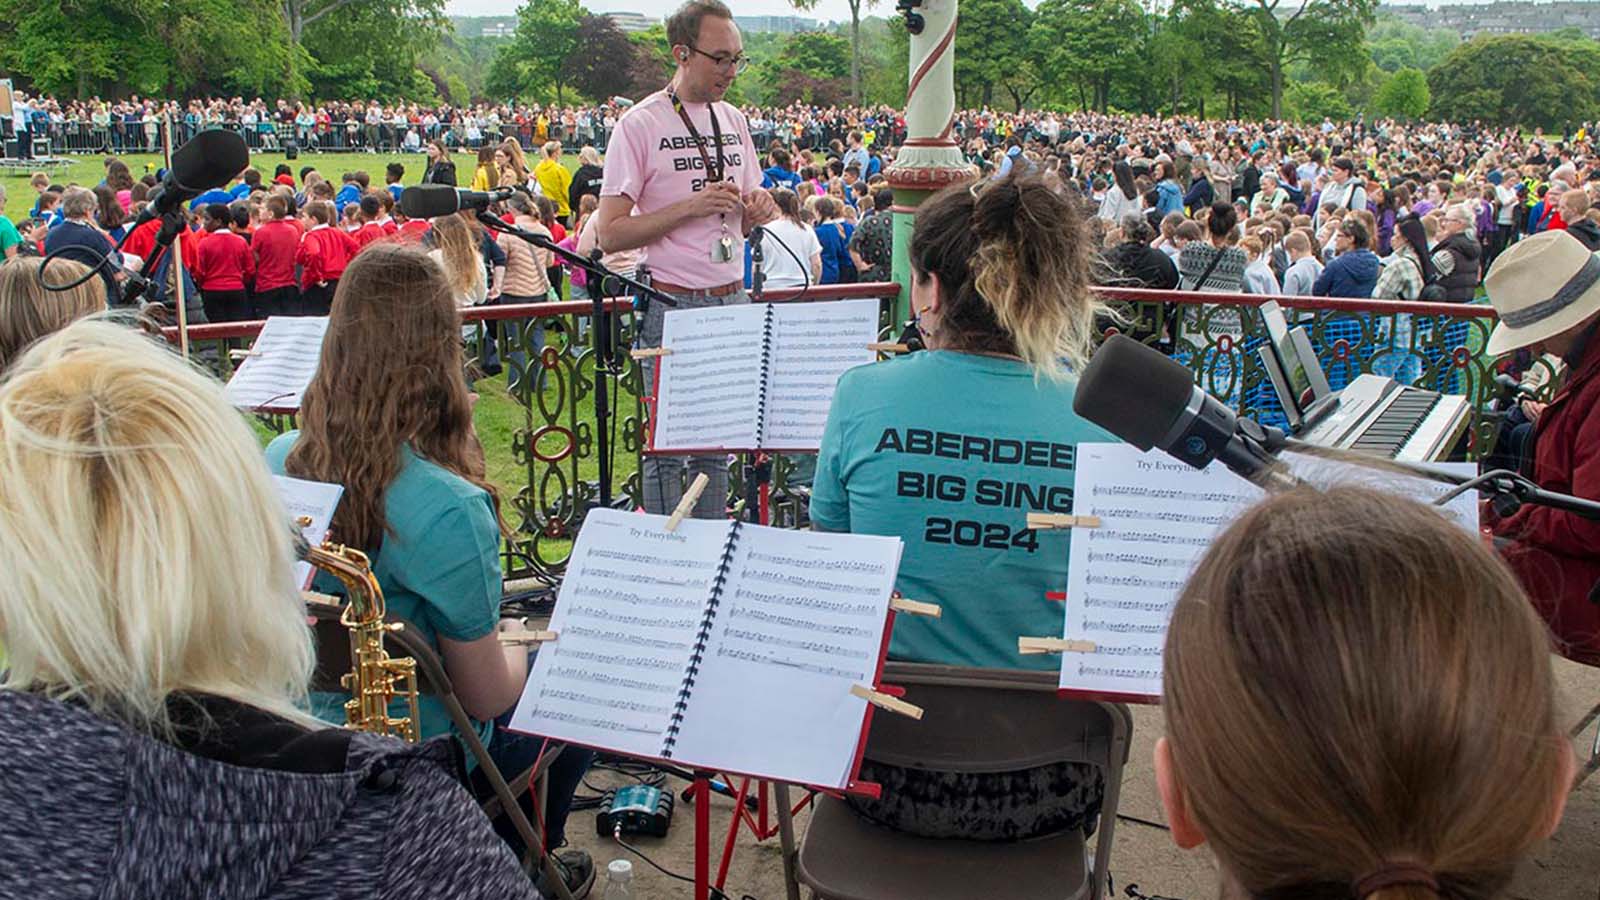 Band members in a gazebo wearing t shirts that say 'Aberdeen Big Sing 2024'